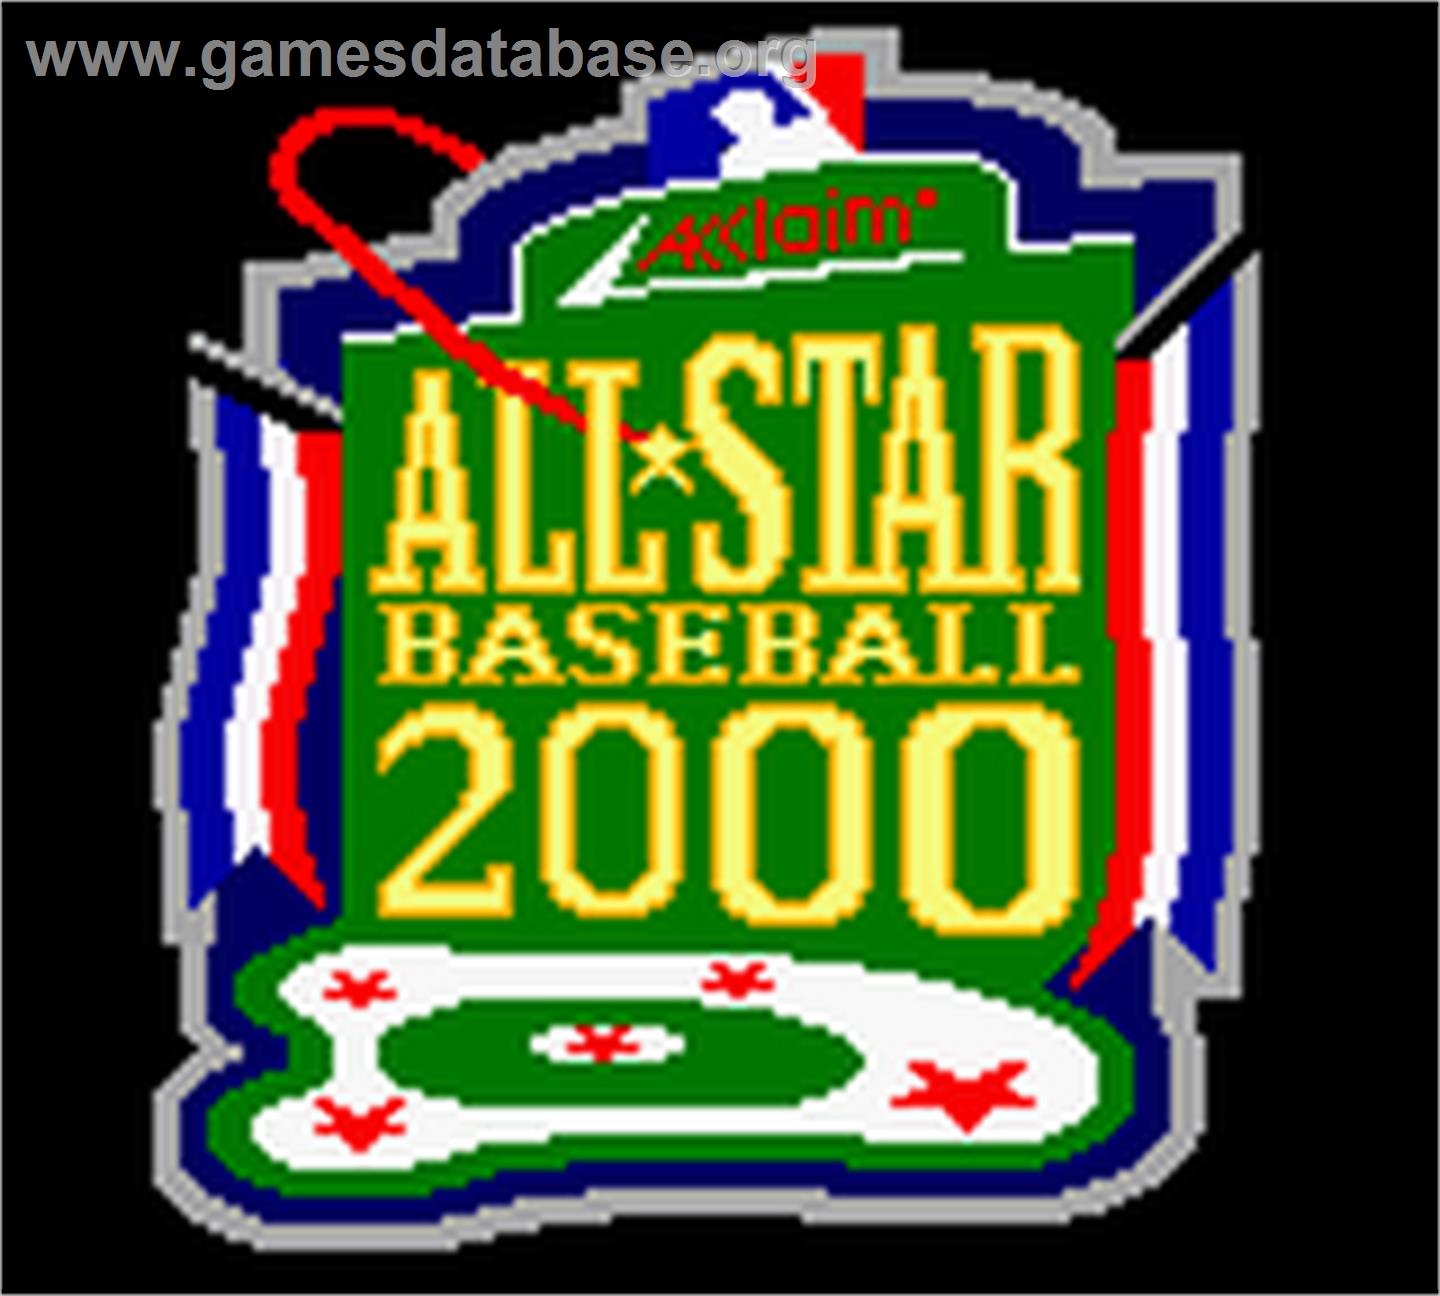 All-Star Baseball 2000 - Nintendo Game Boy Color - Artwork - Title Screen